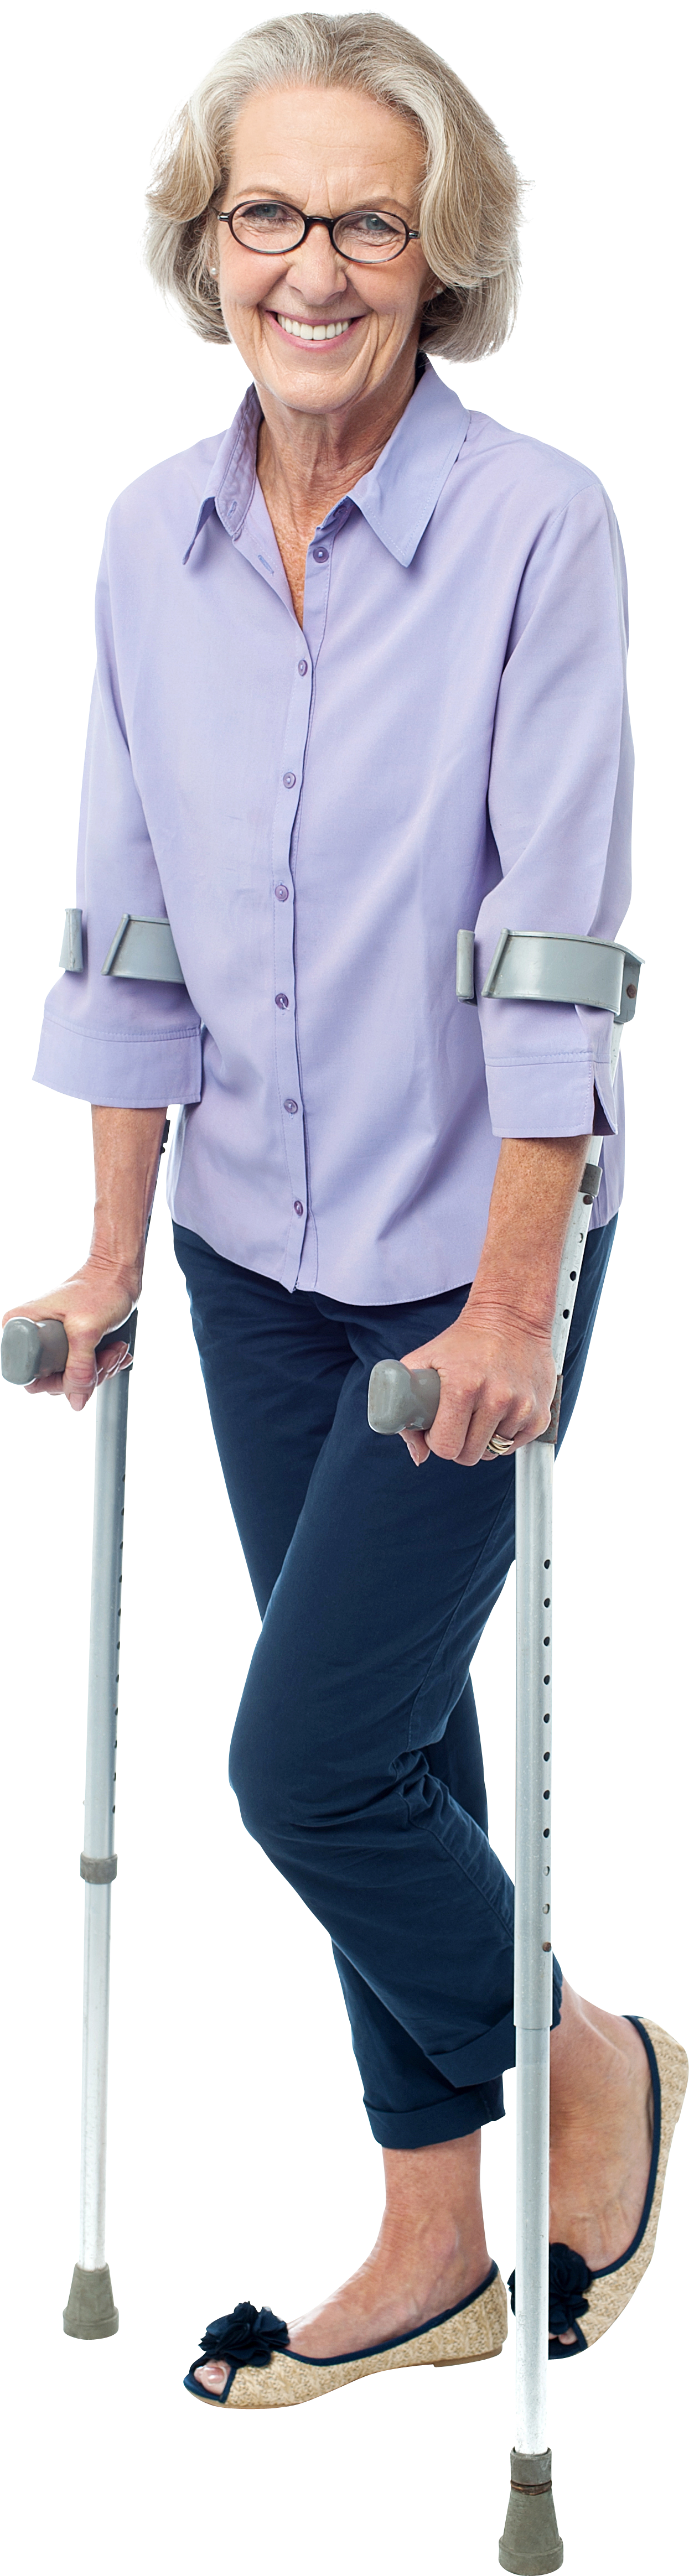 Smiling Senior Woman With Crutches